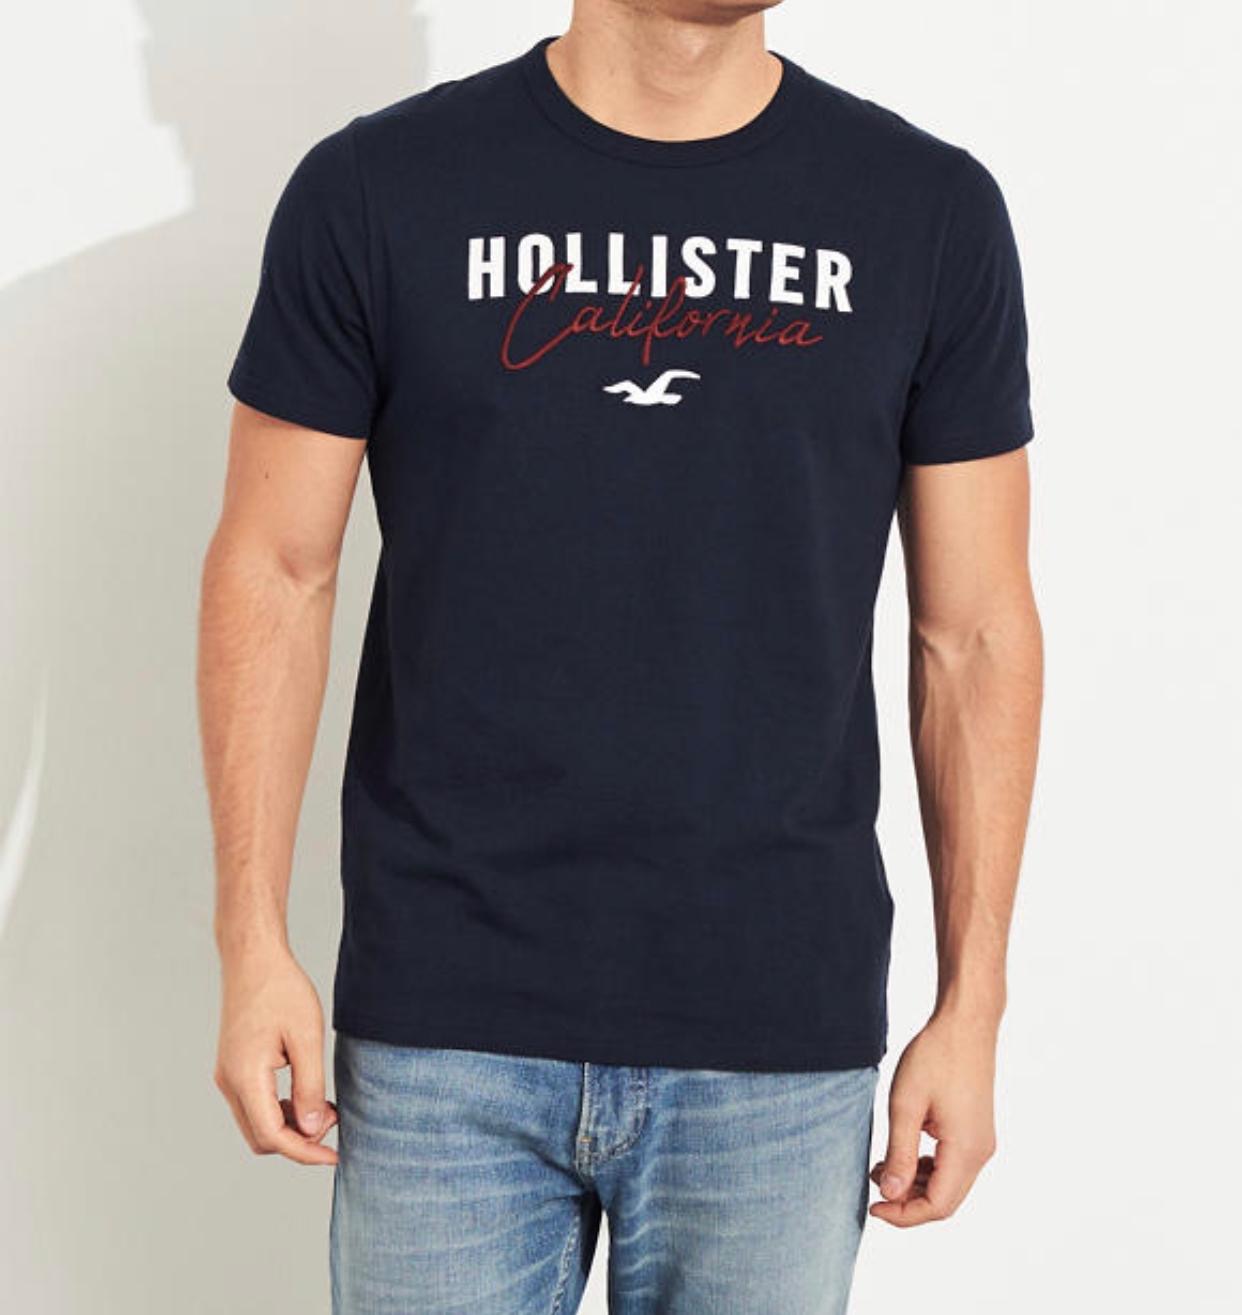 hollister t shirts usa